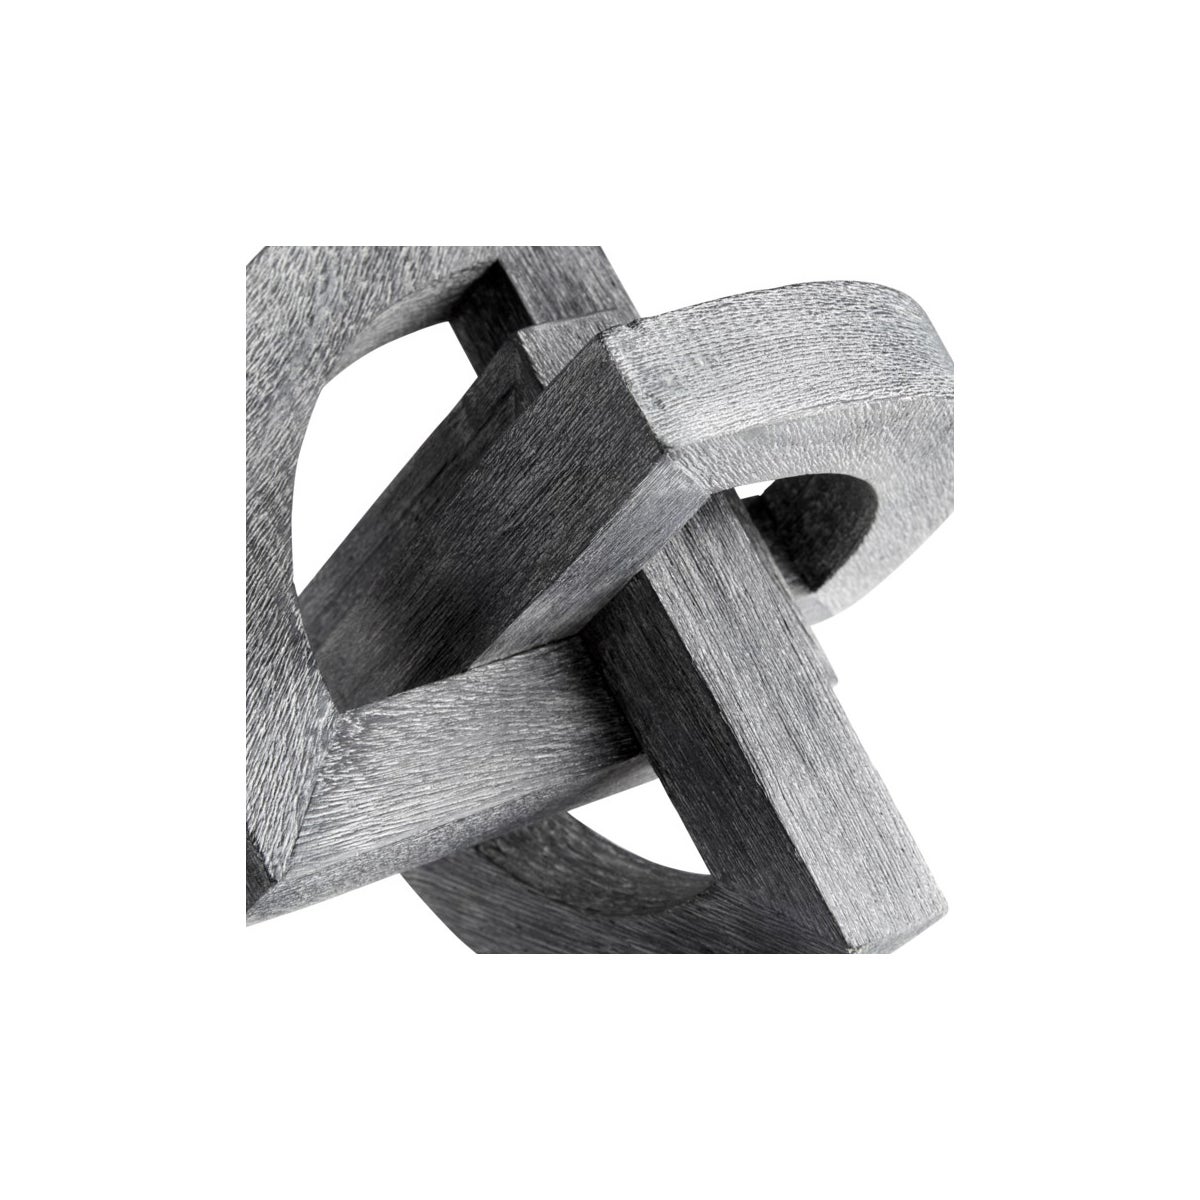 Gali Sculpture #3 | Weathered Grey